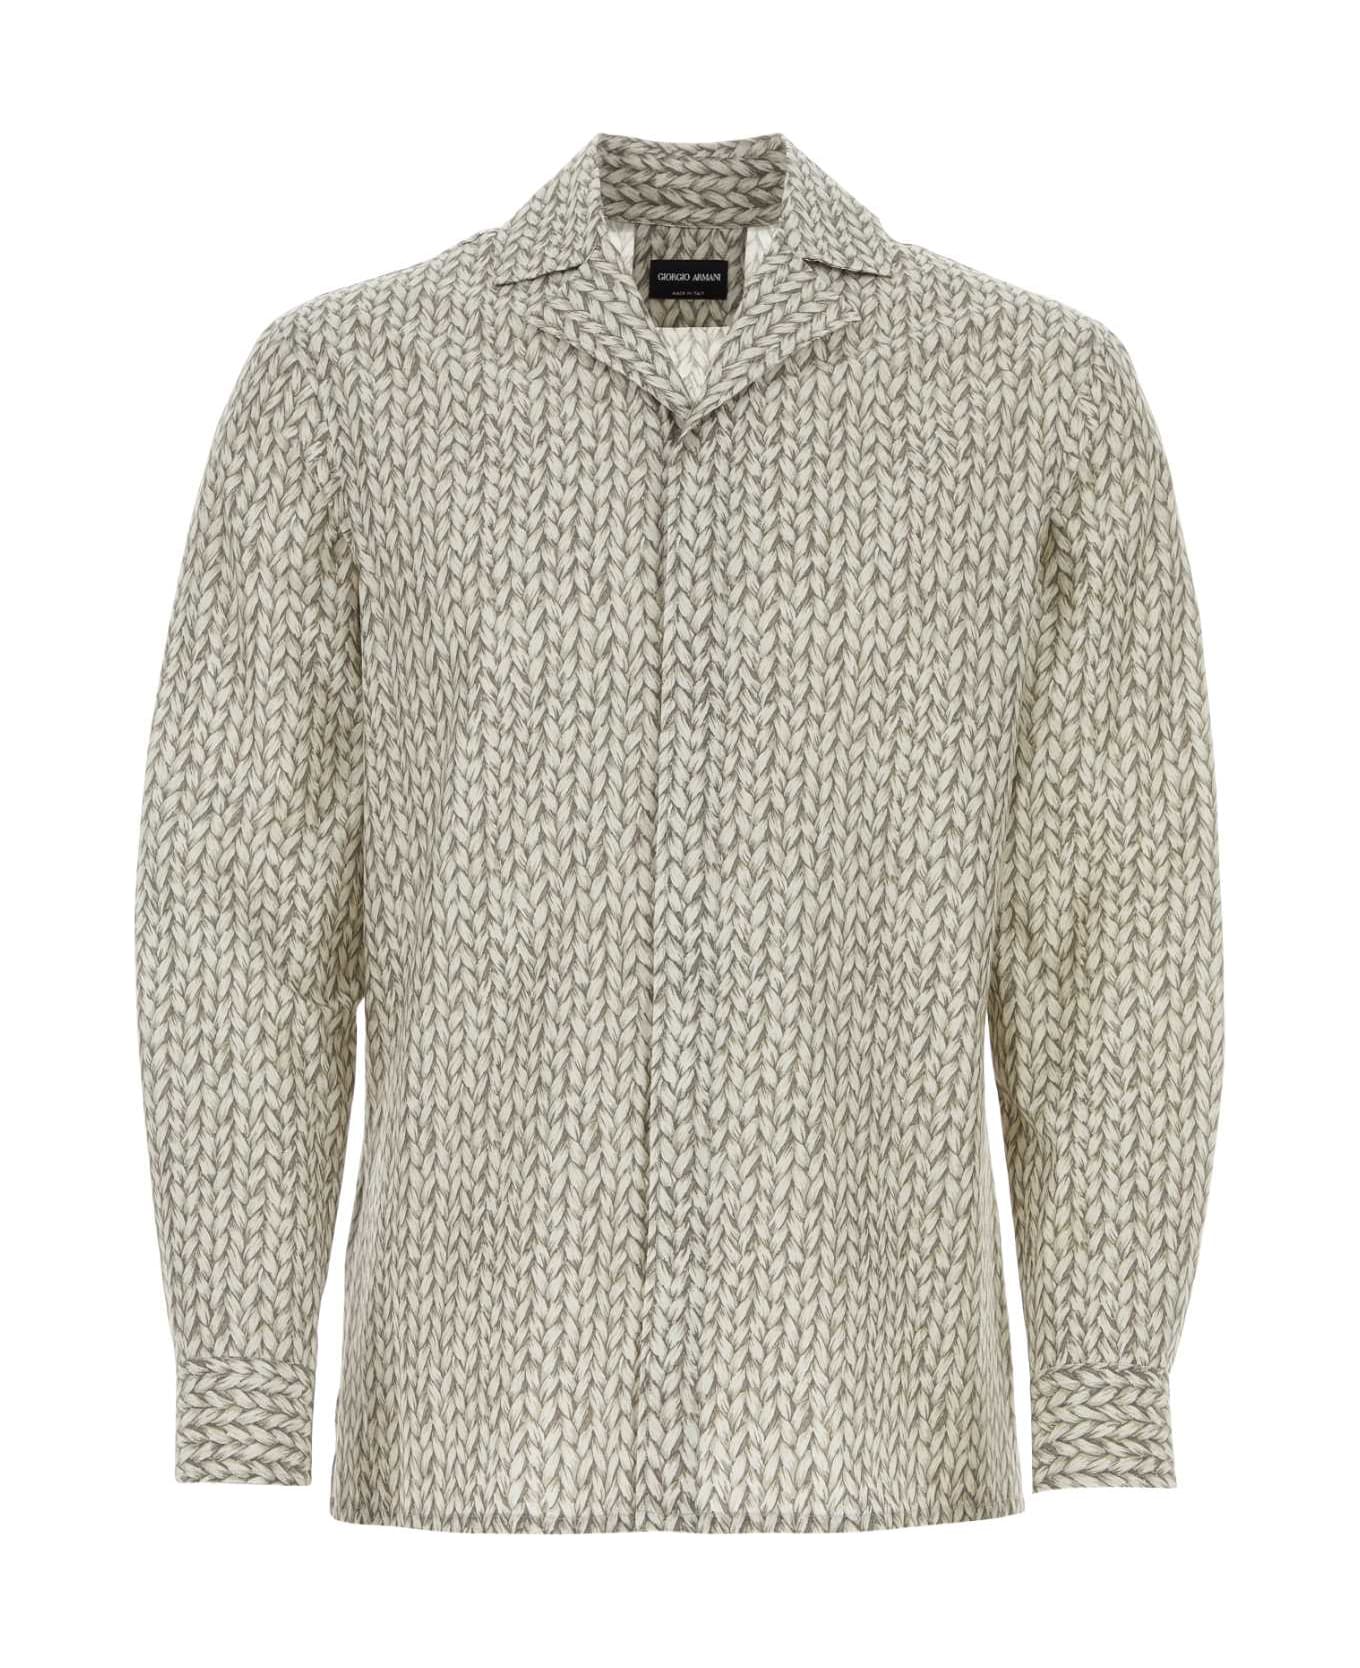 Giorgio Armani Printed Cotton Blend Shirt - MULTI